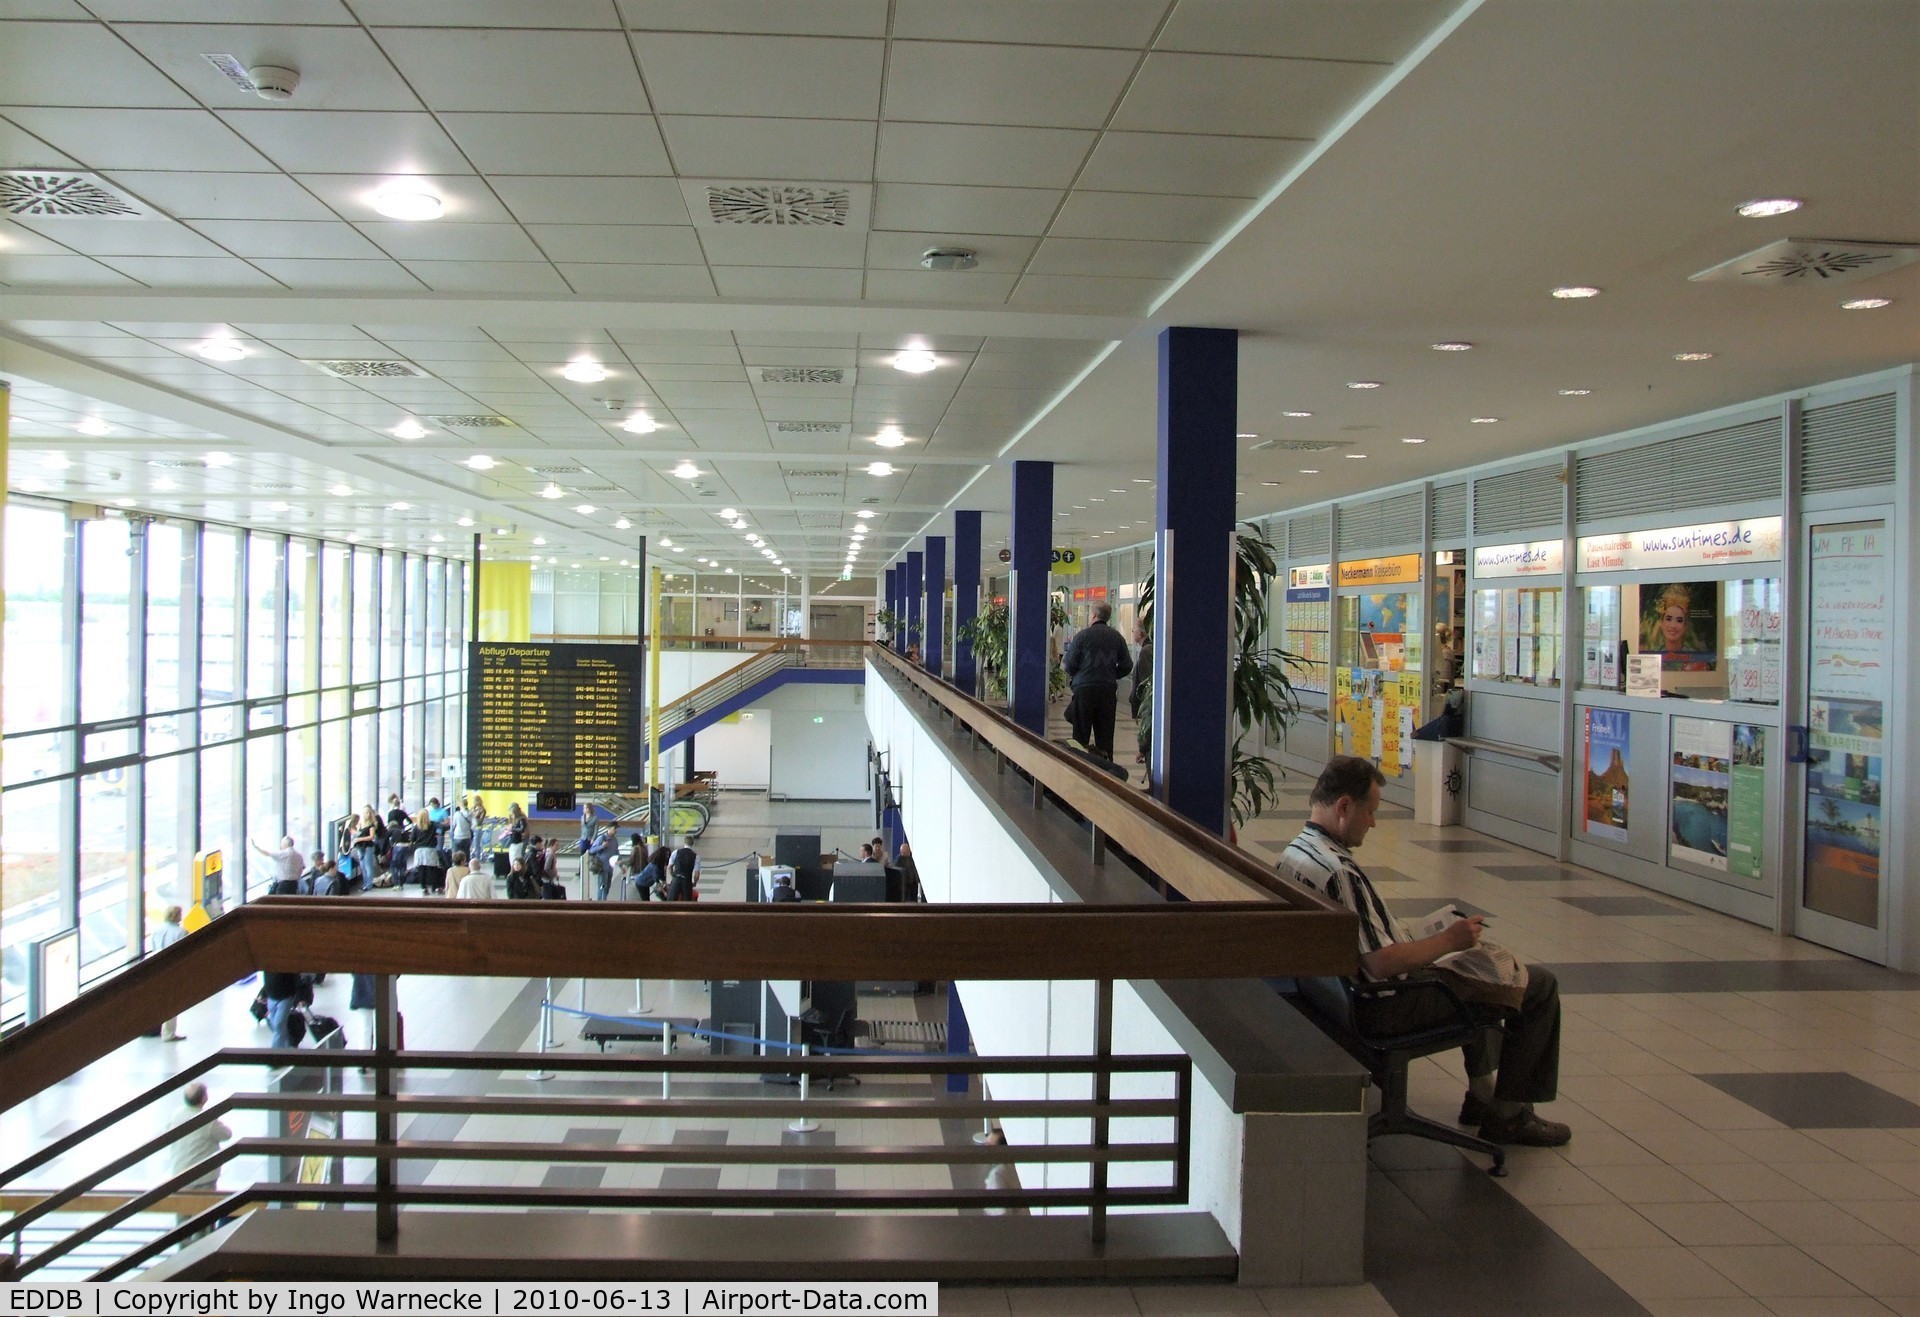 Berlin Brandenburg International Airport, Berlin Germany (EDDB) - in the terminal at Schönefeld airport